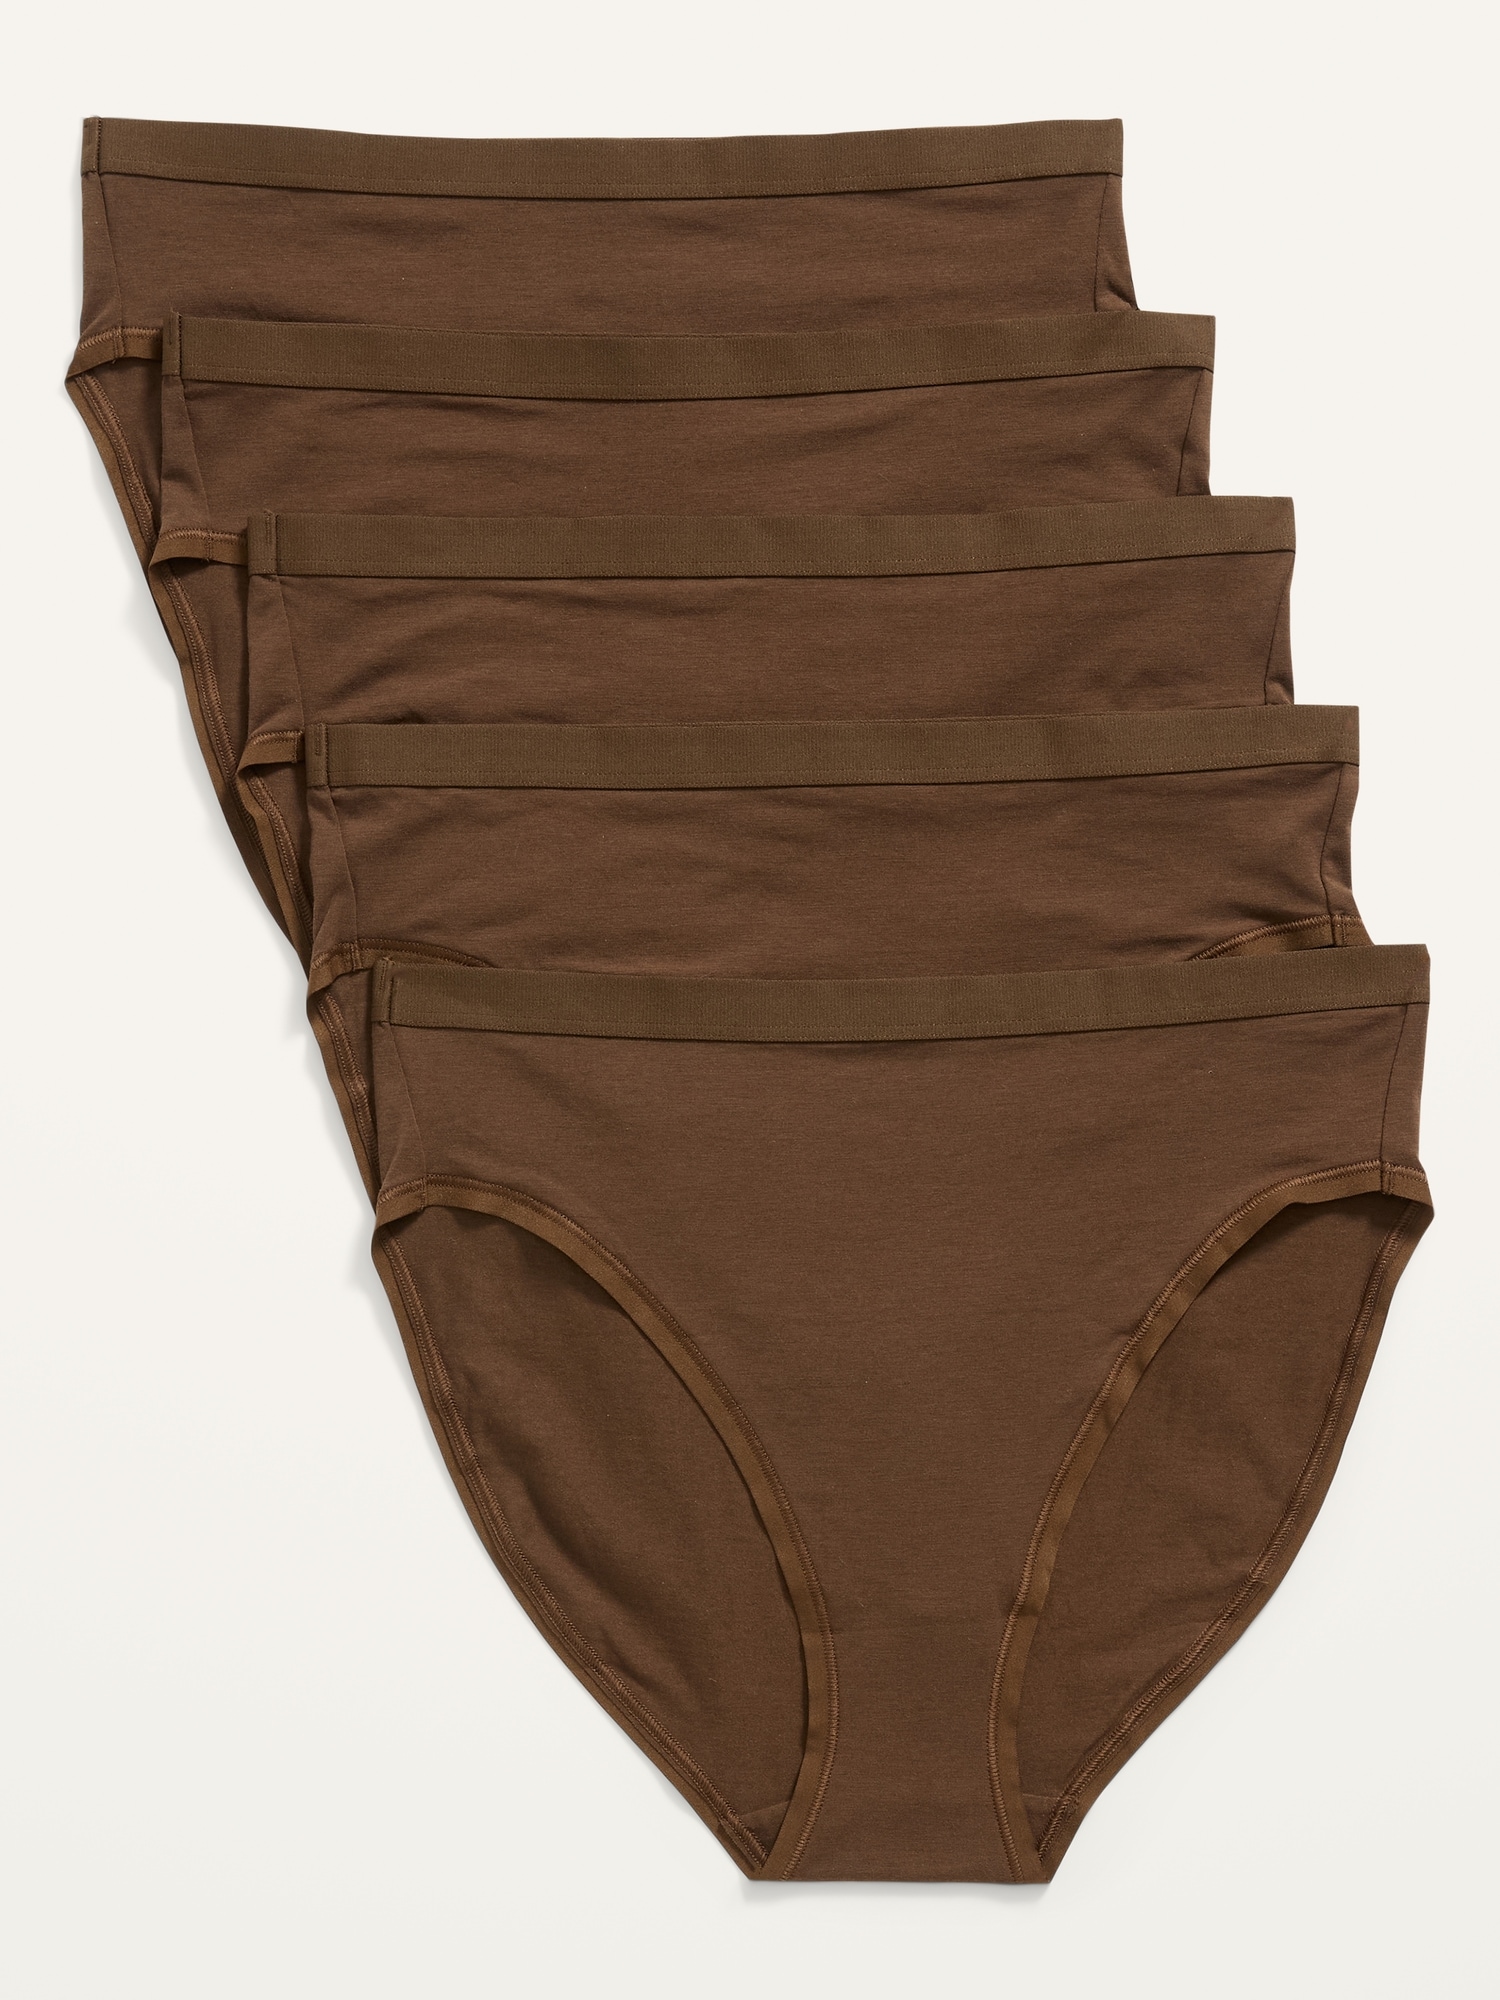 GAP unisex baby Briefs Bikini Style Underwear, Multi, 2-3T US at   Women's Clothing store